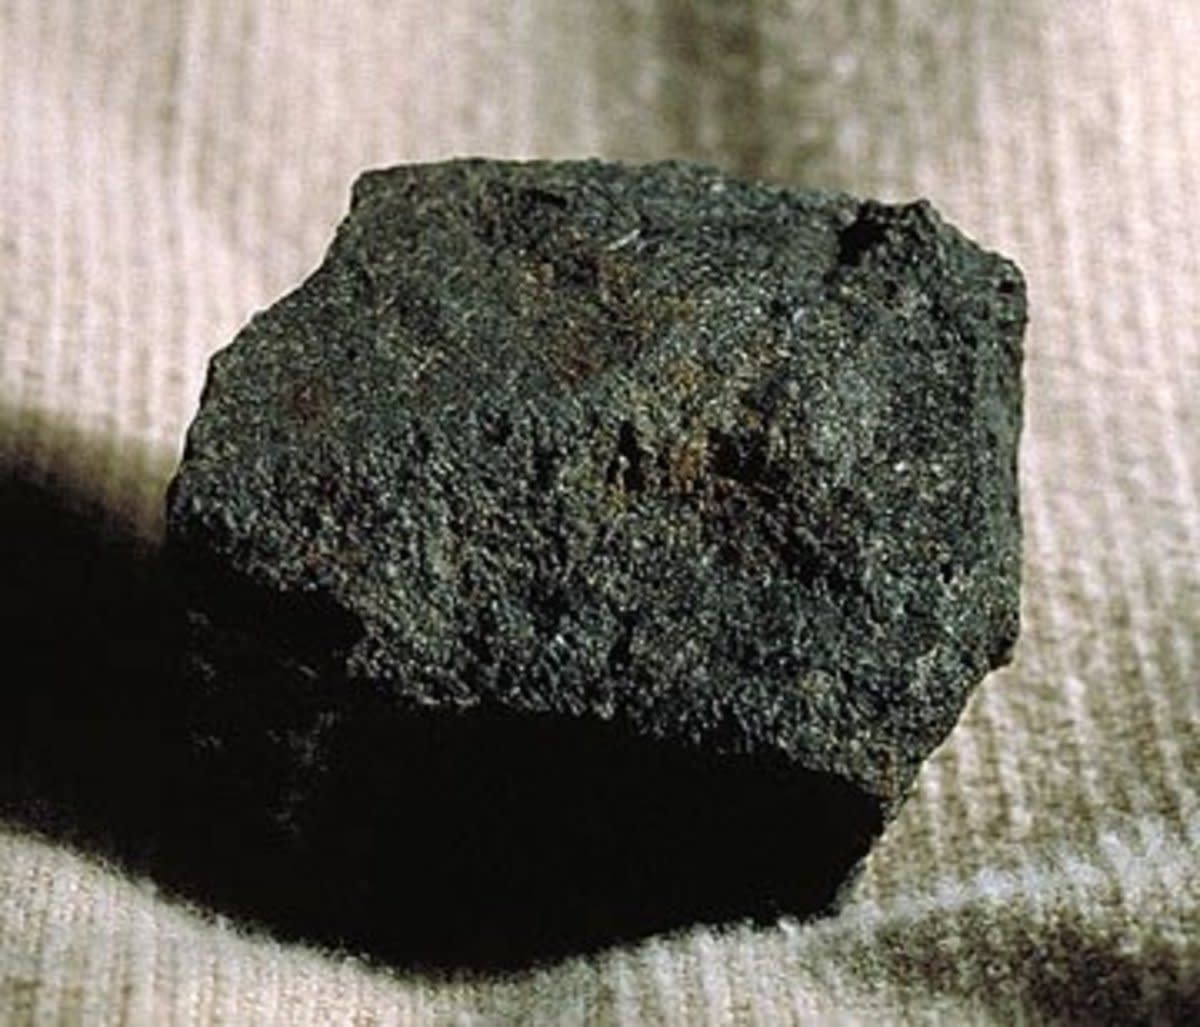 Is Anthracite or Bituminous Coal better for Blacksmithing?